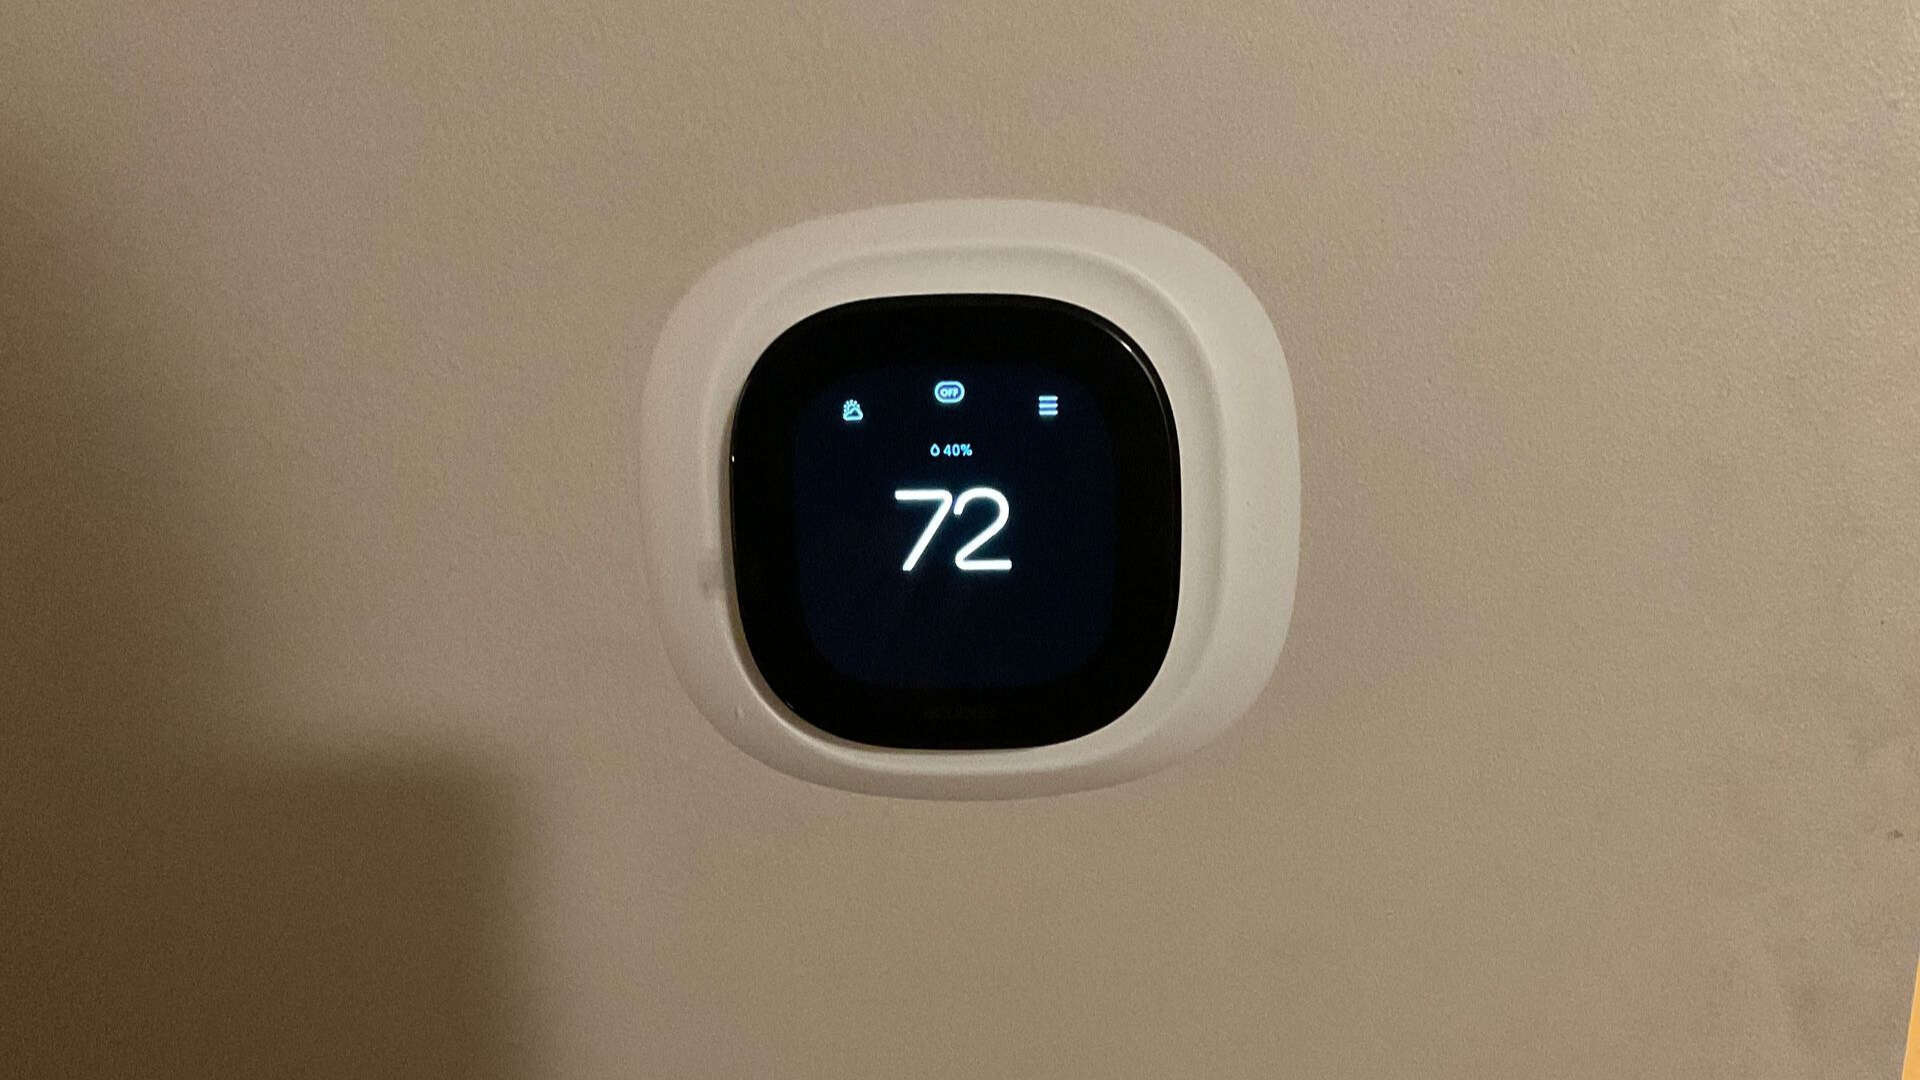 Thermostat Repair Service